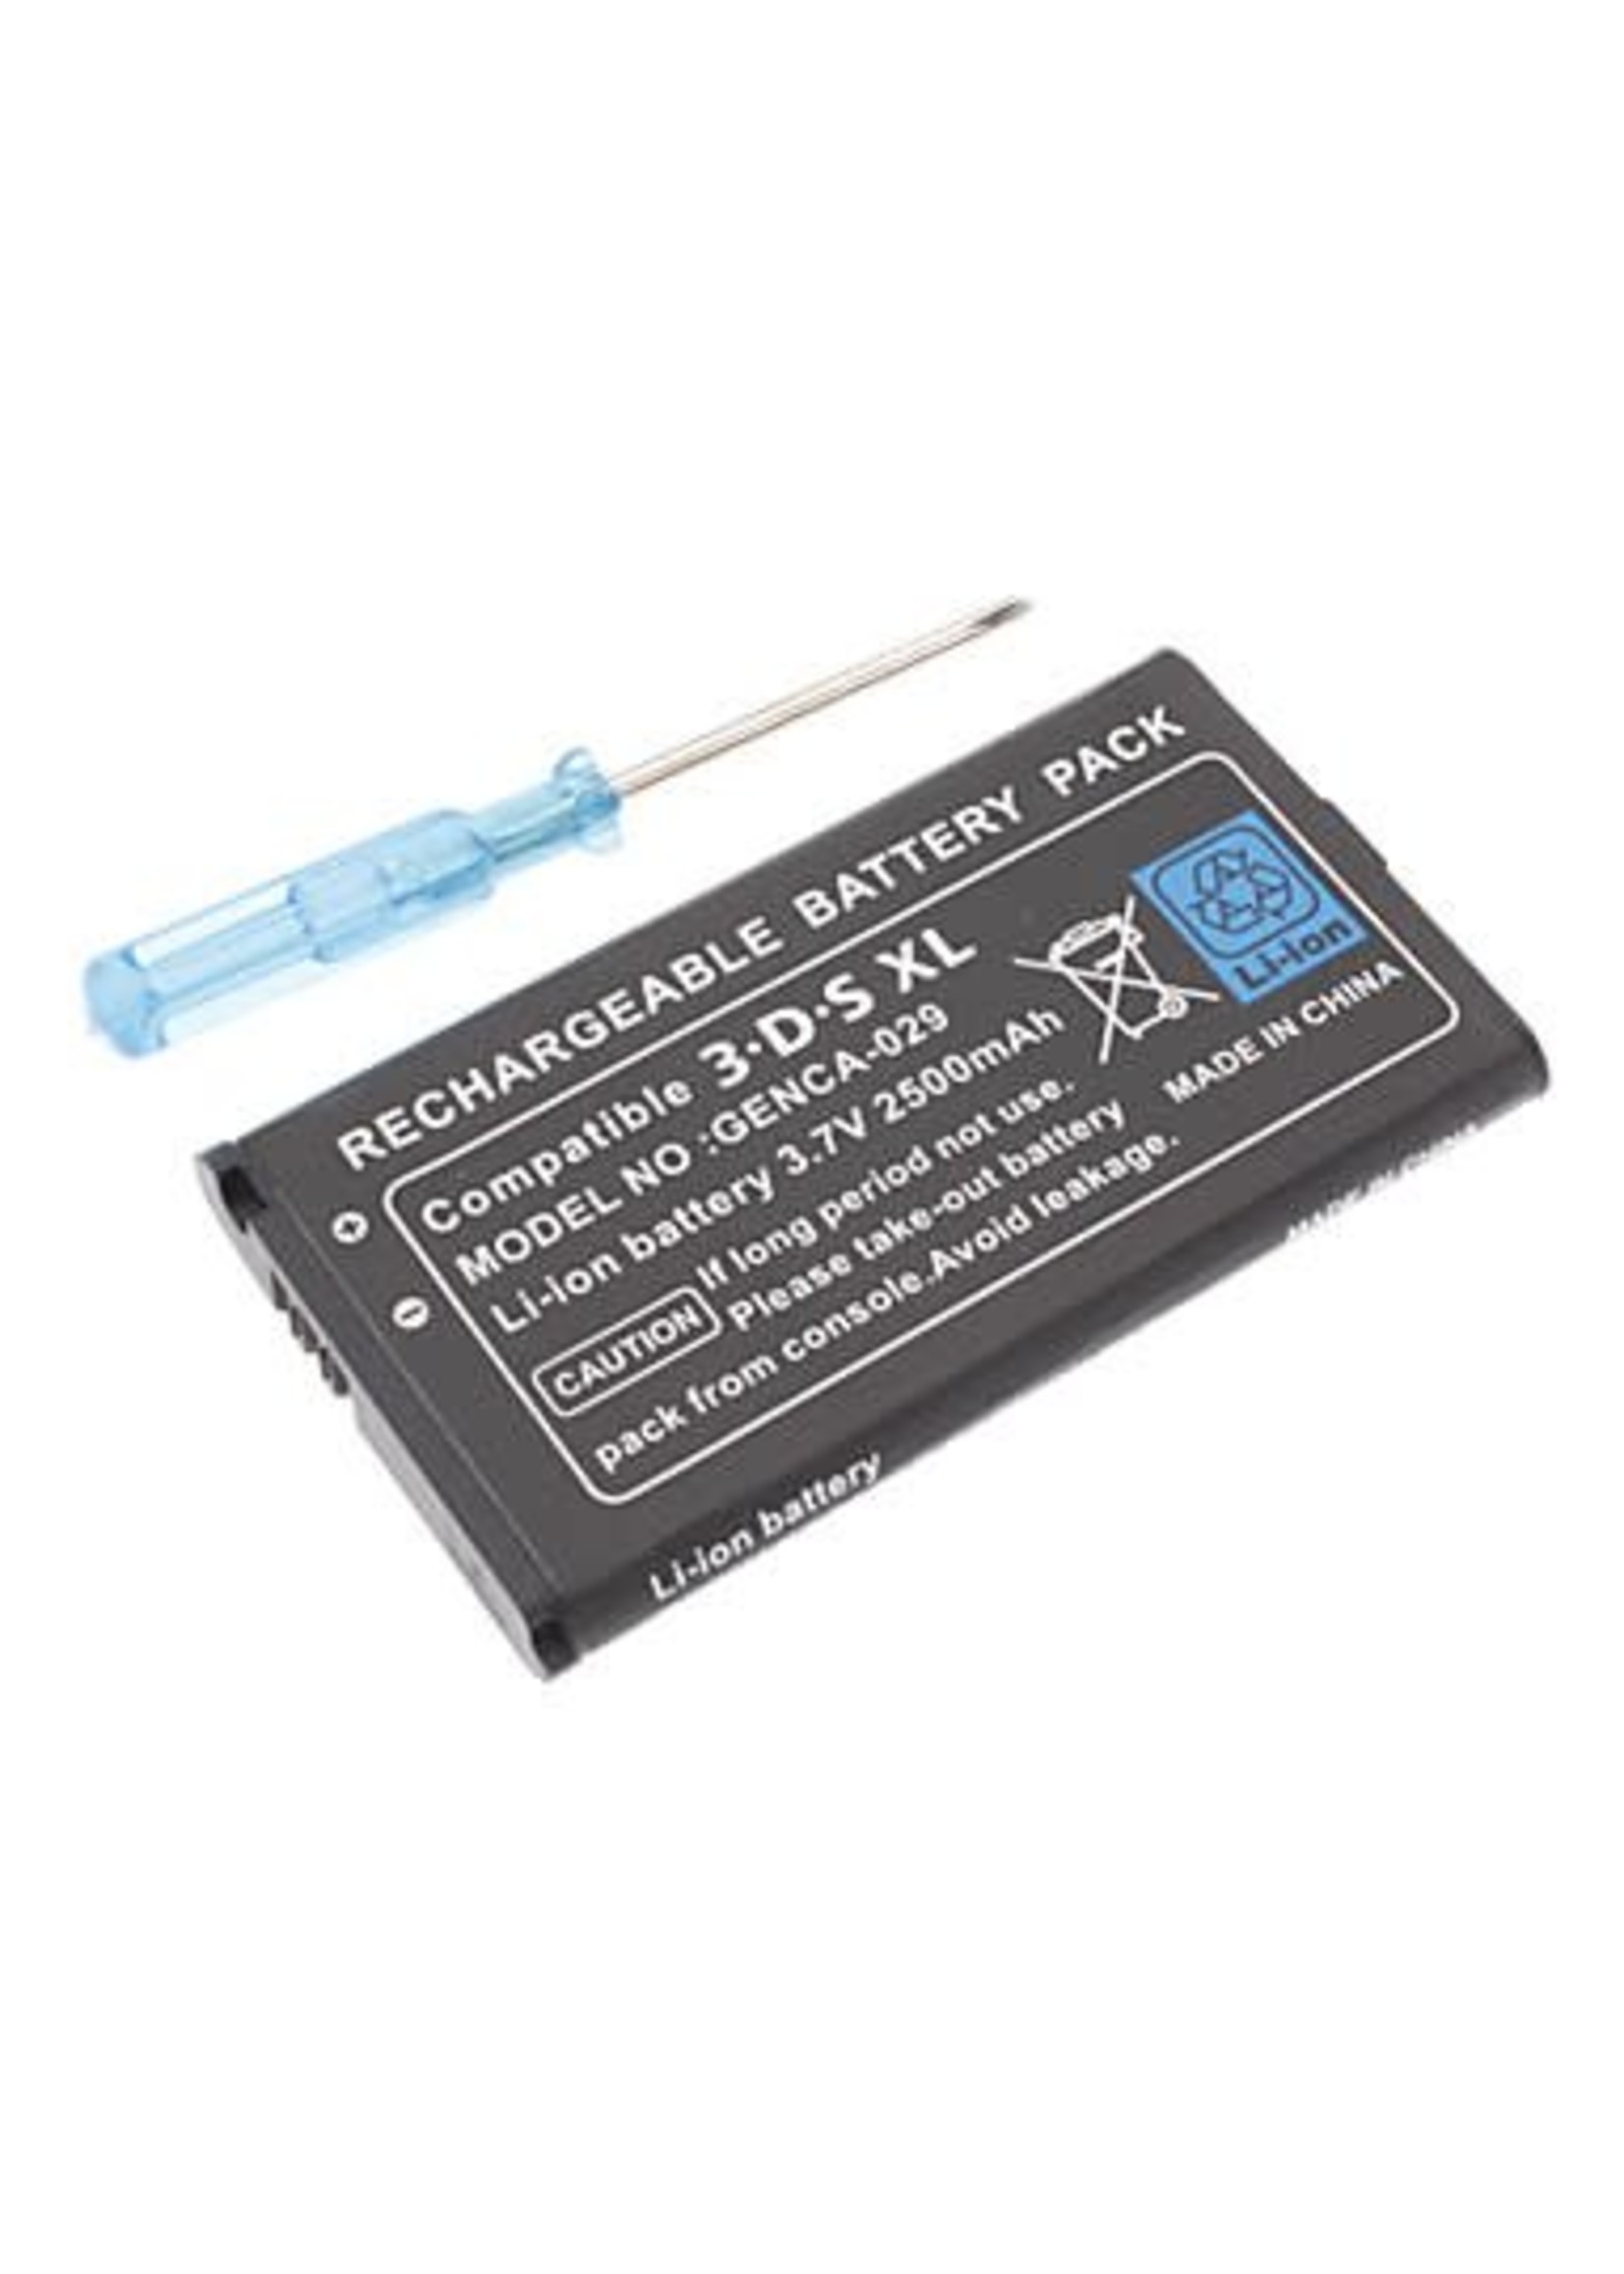 3DS XL Battery Kit